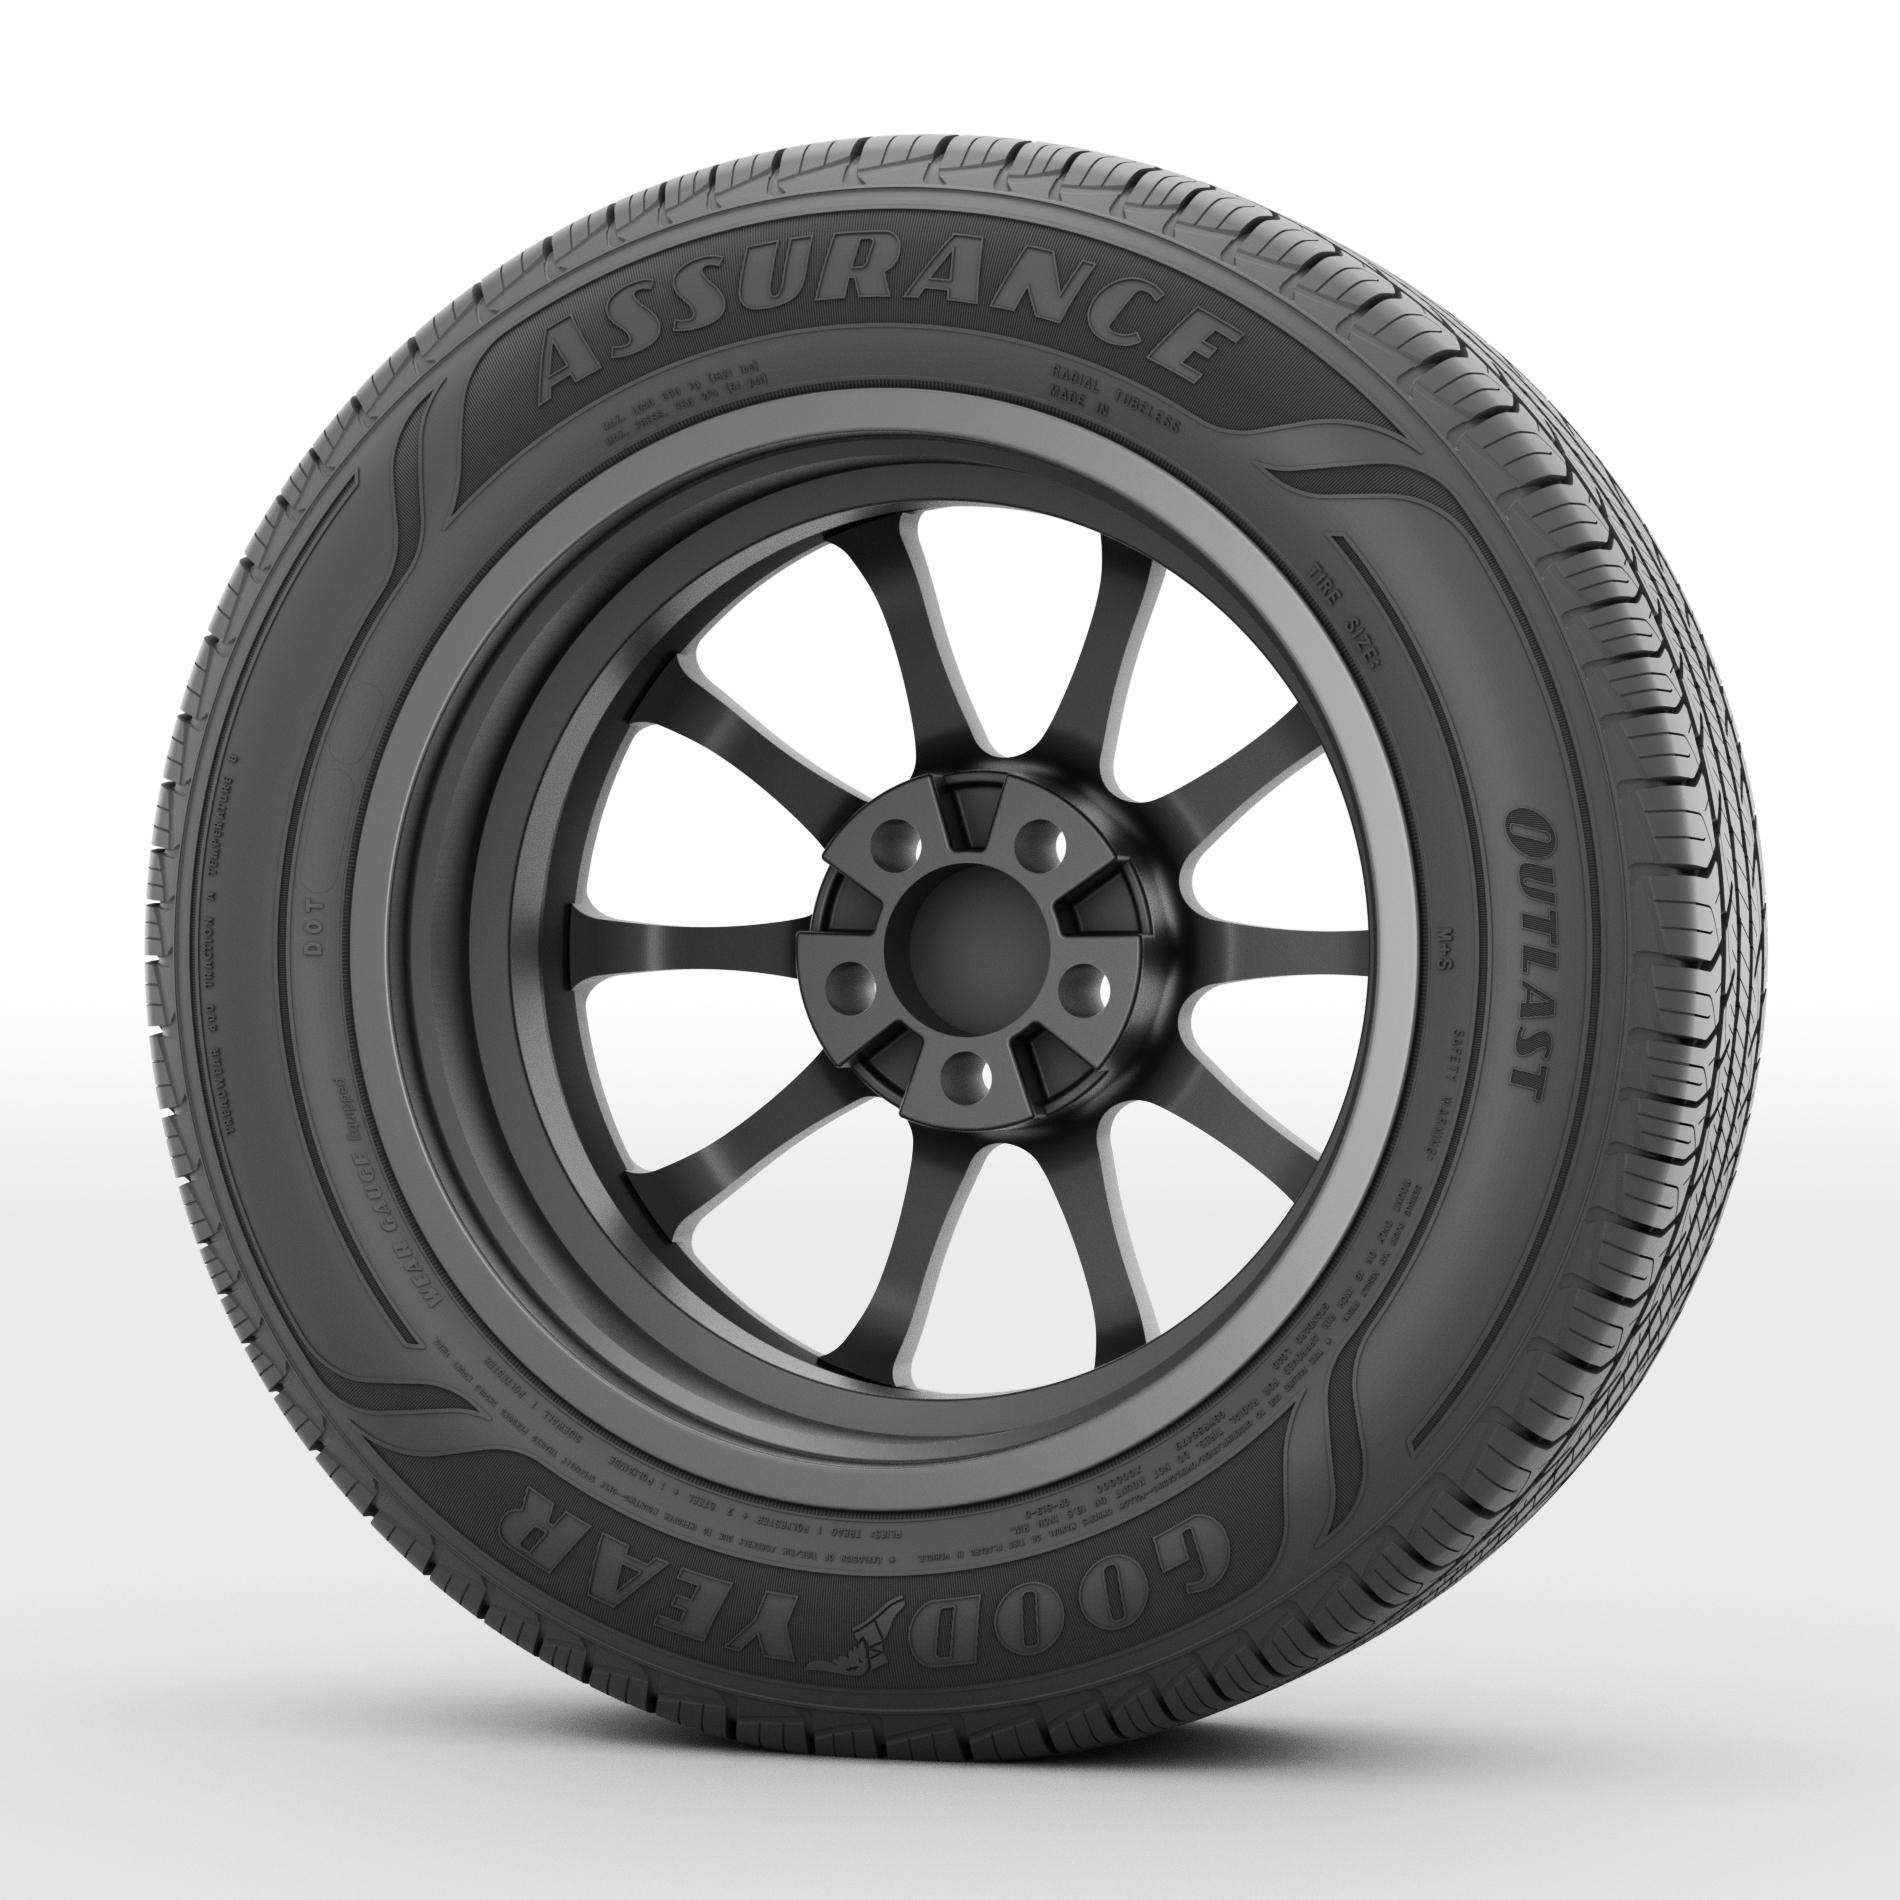 95V Goodyear All-Season Outlast Tire 215/60R16 Assurance